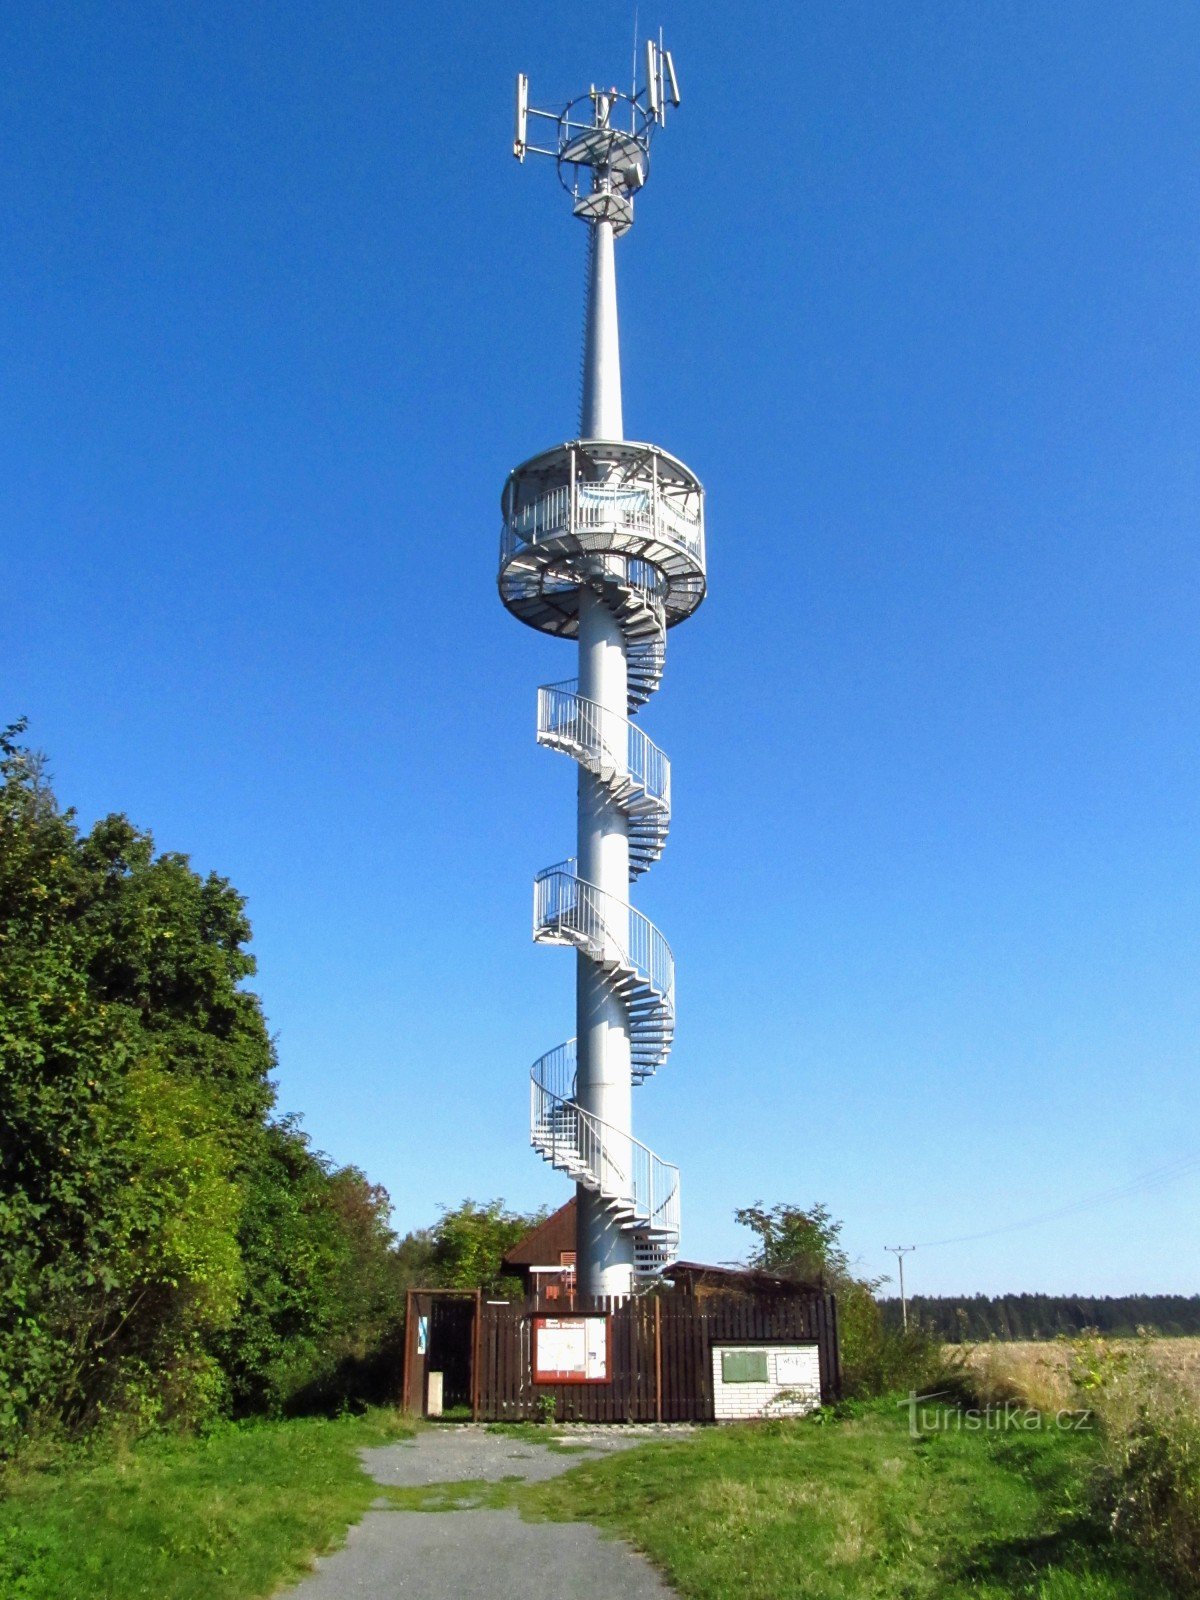 02 Turnul de observație al lui Mack